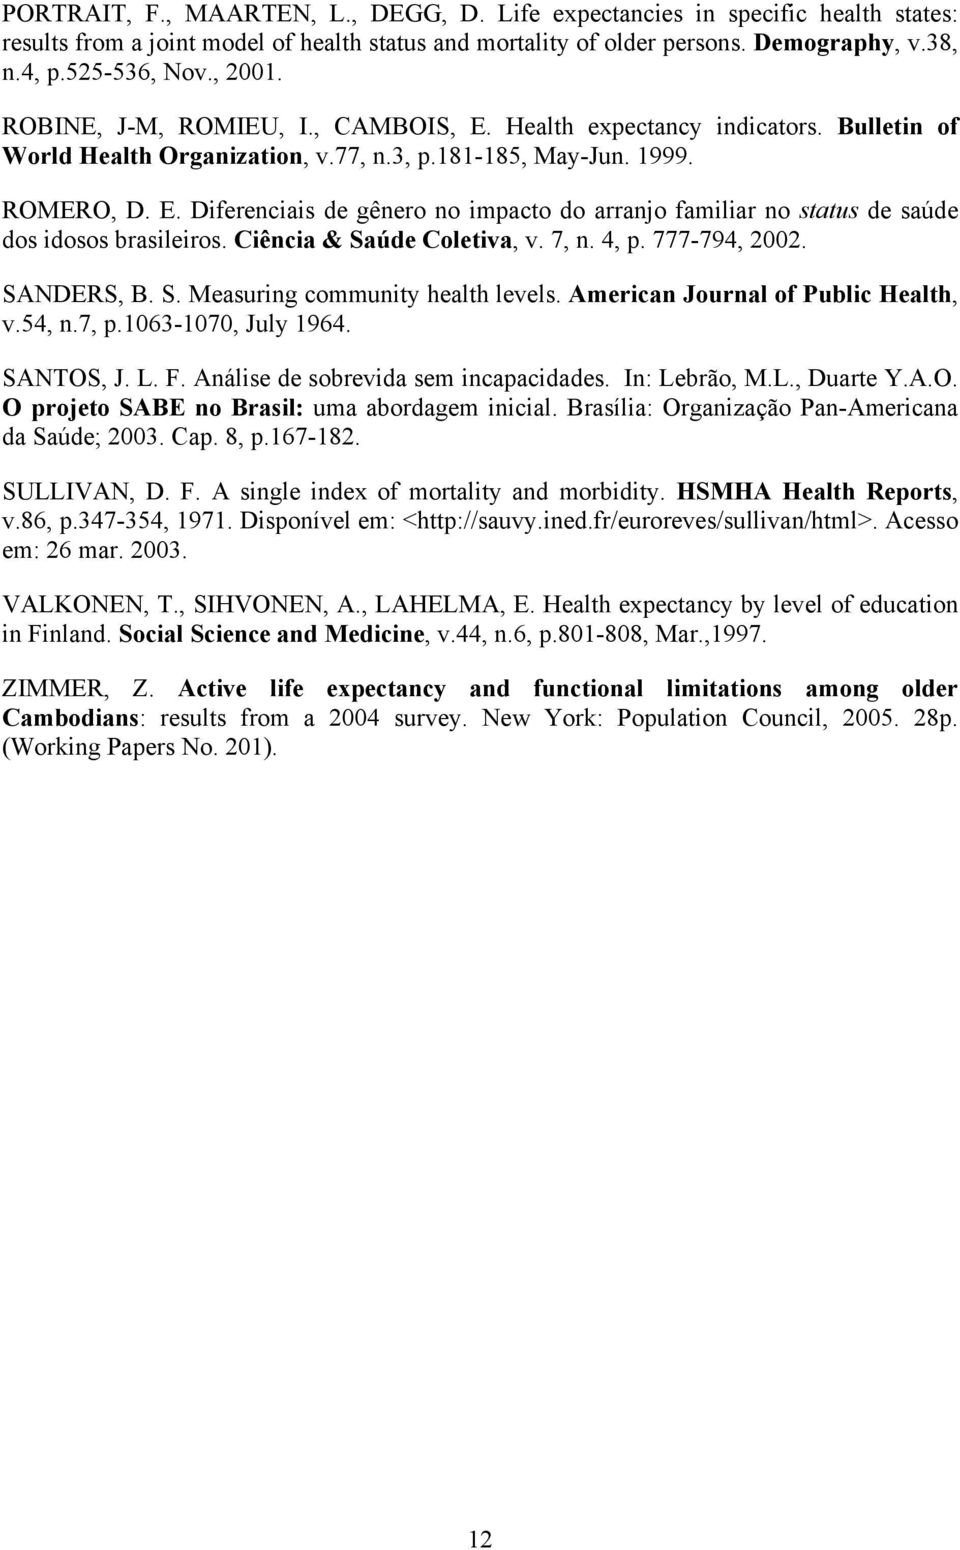 Ciência & Saúde Coletiva, v. 7, n. 4, p. 777-794, 2002. SANDERS, B. S. Measuring community health levels. American Journal of Public Health, v.54, n.7, p.1063-1070, July 1964. SANTOS, J. L. F.